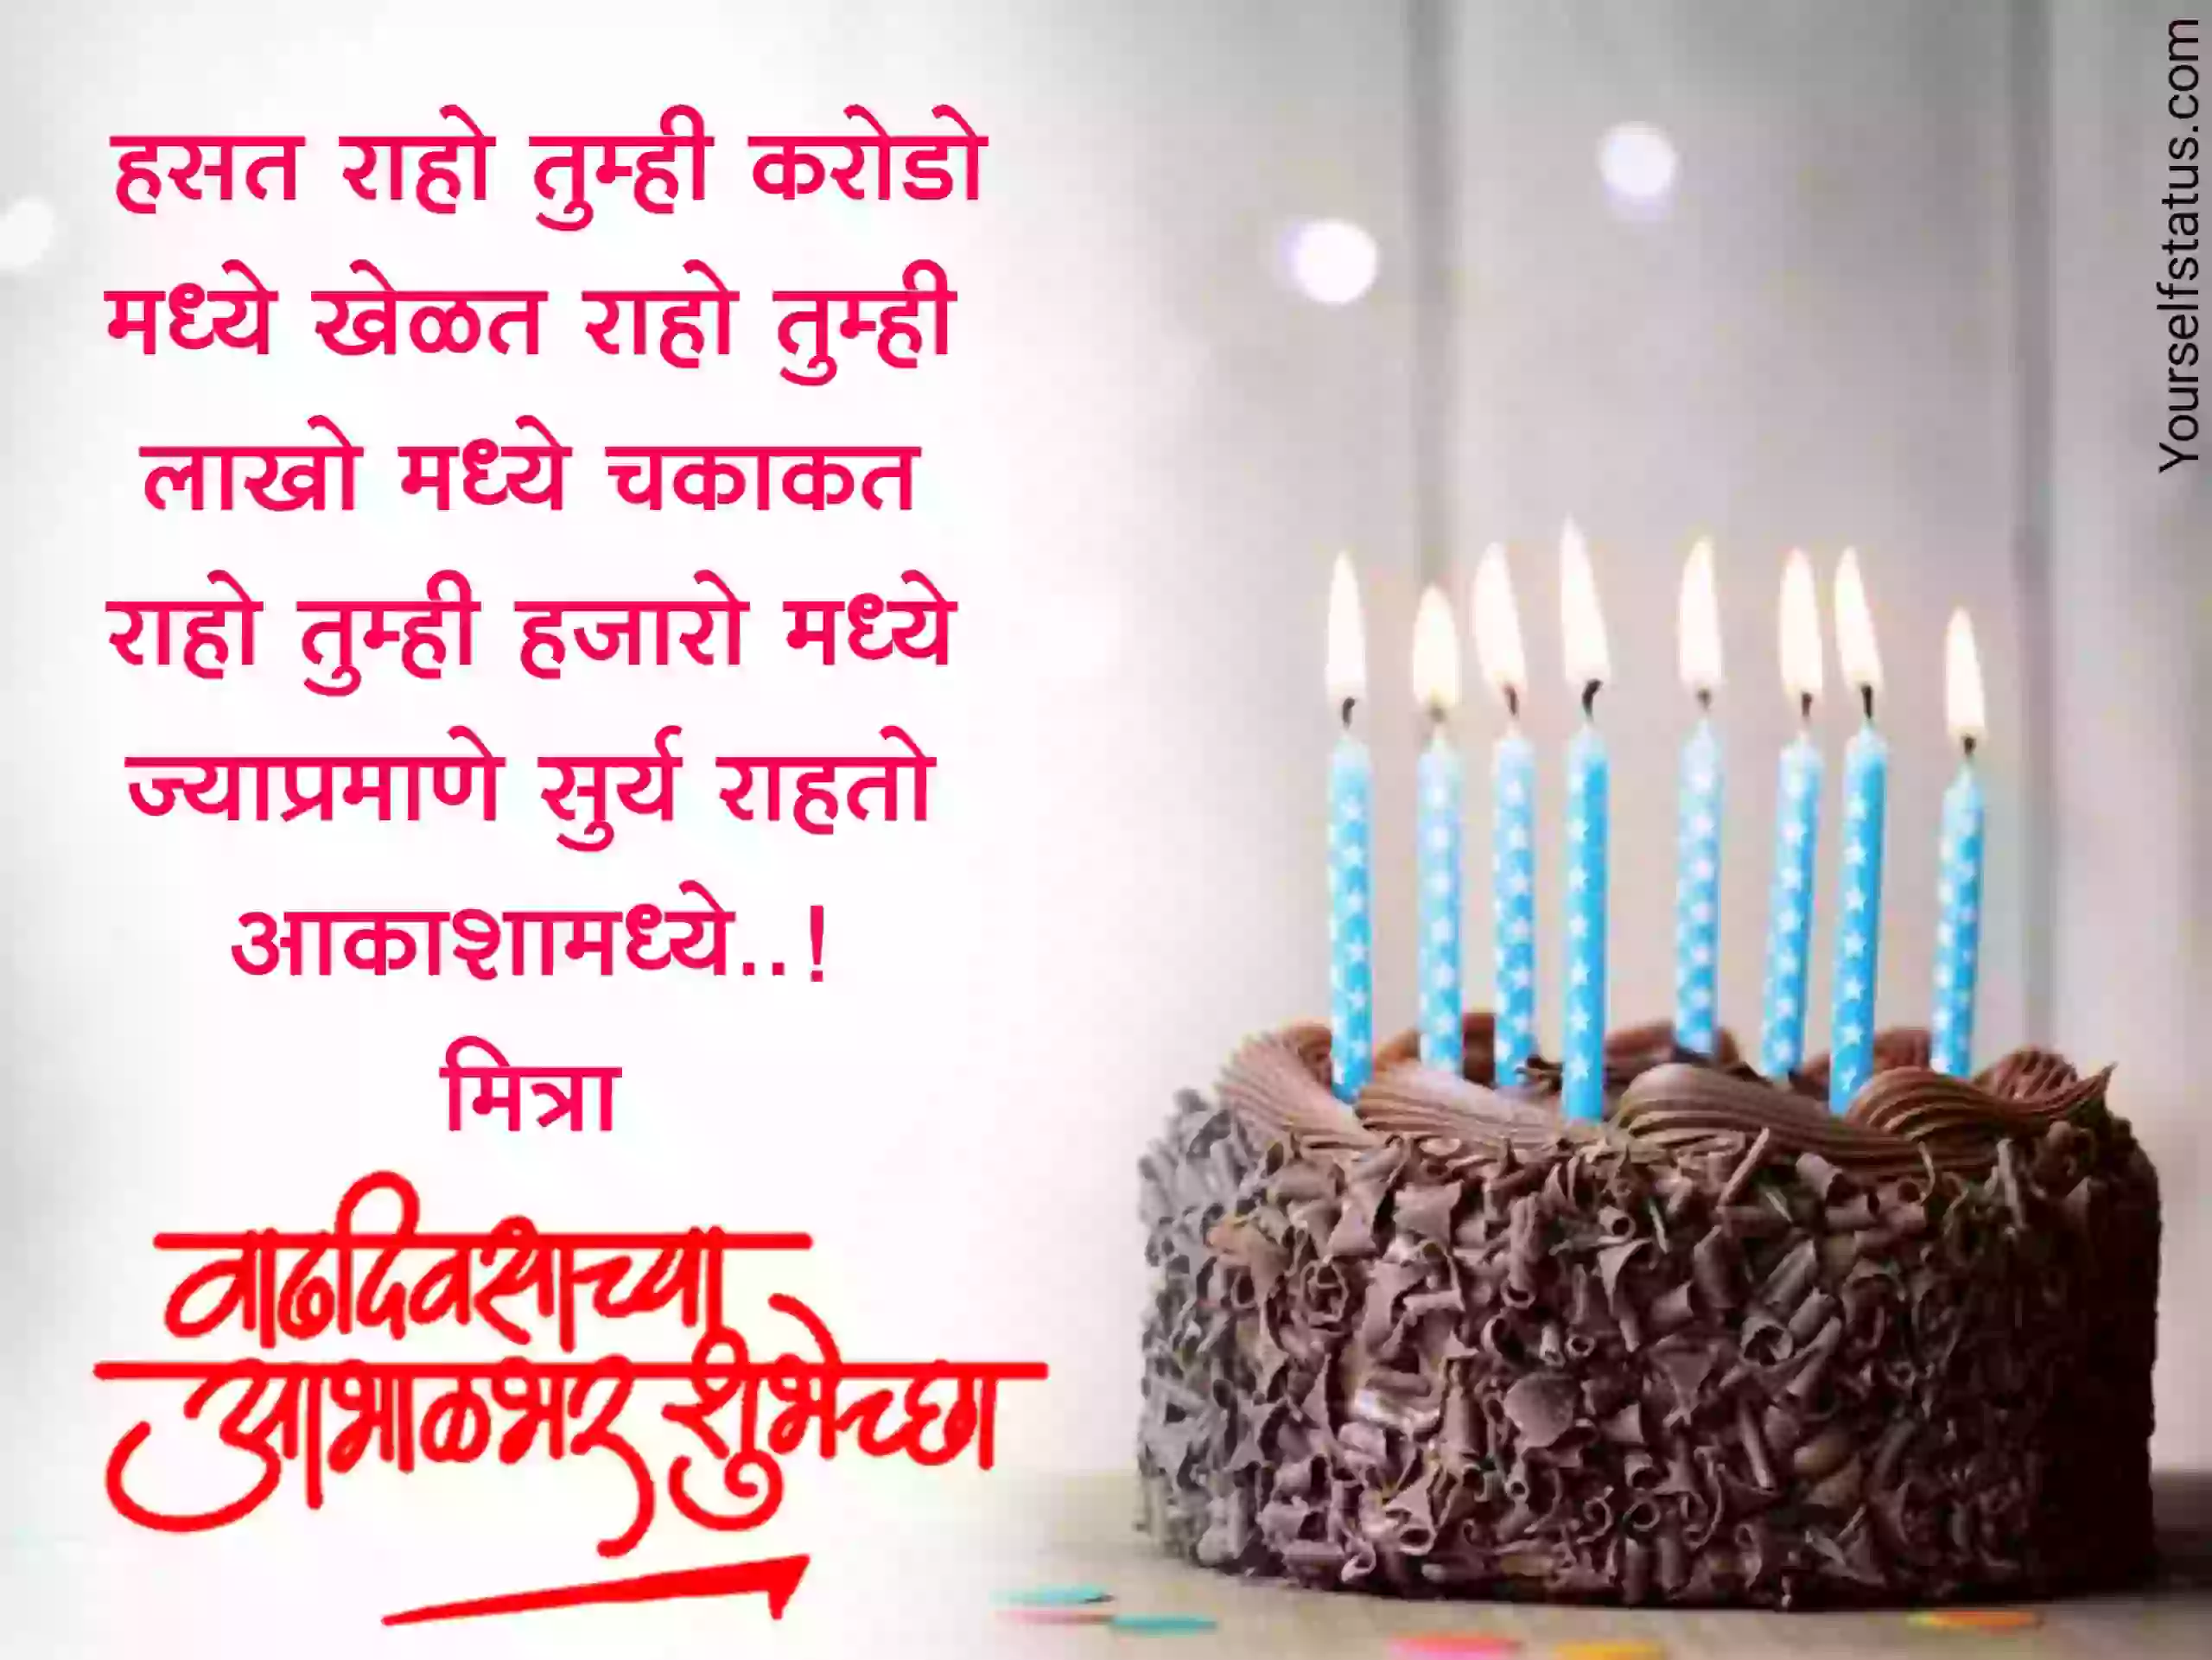 Happy Birthday wishes for friend in marathi